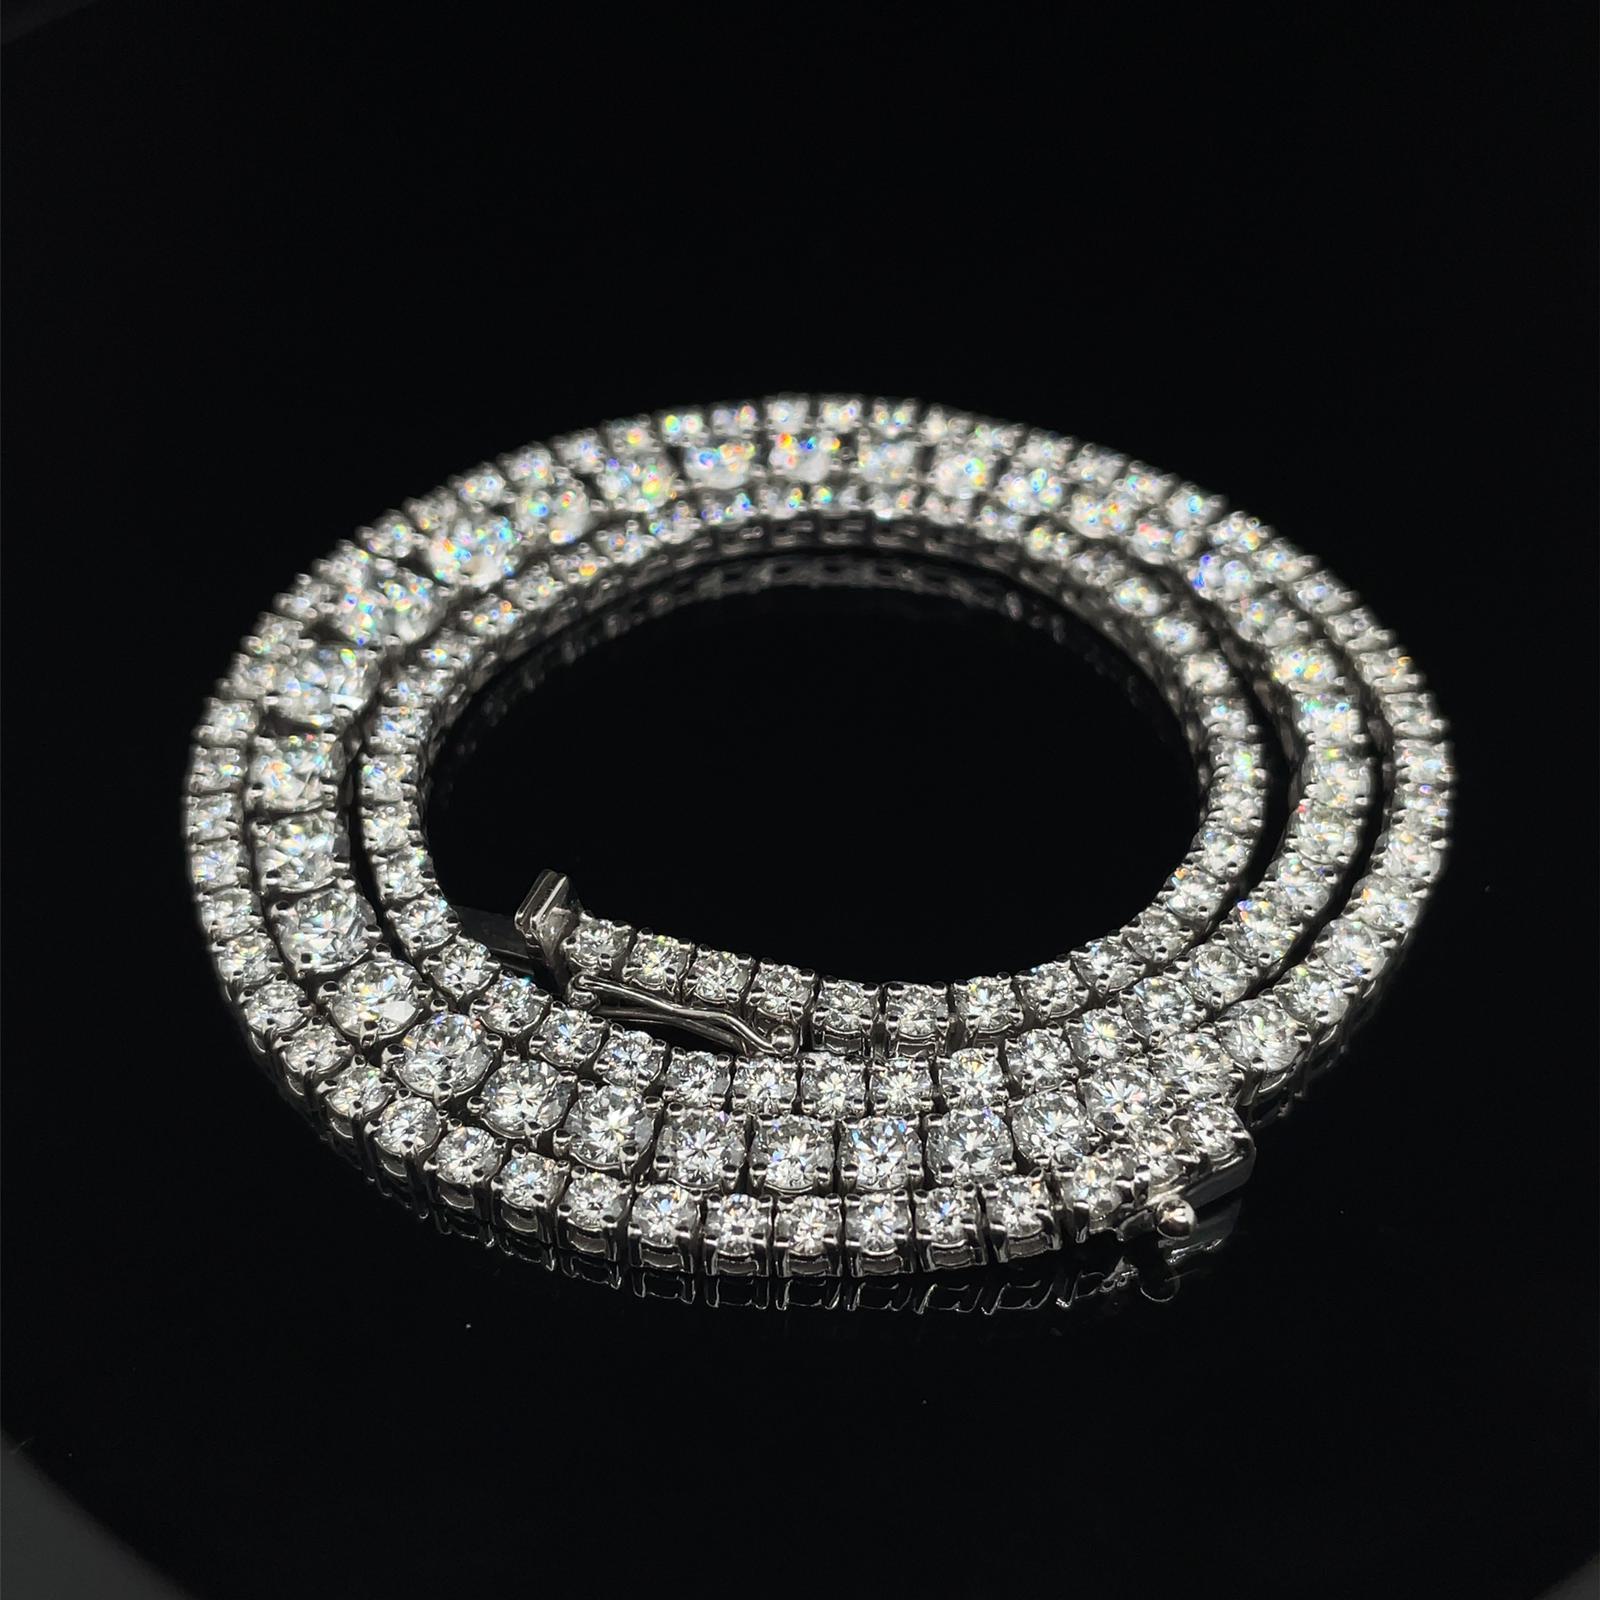 12 carat diamond tennis necklace